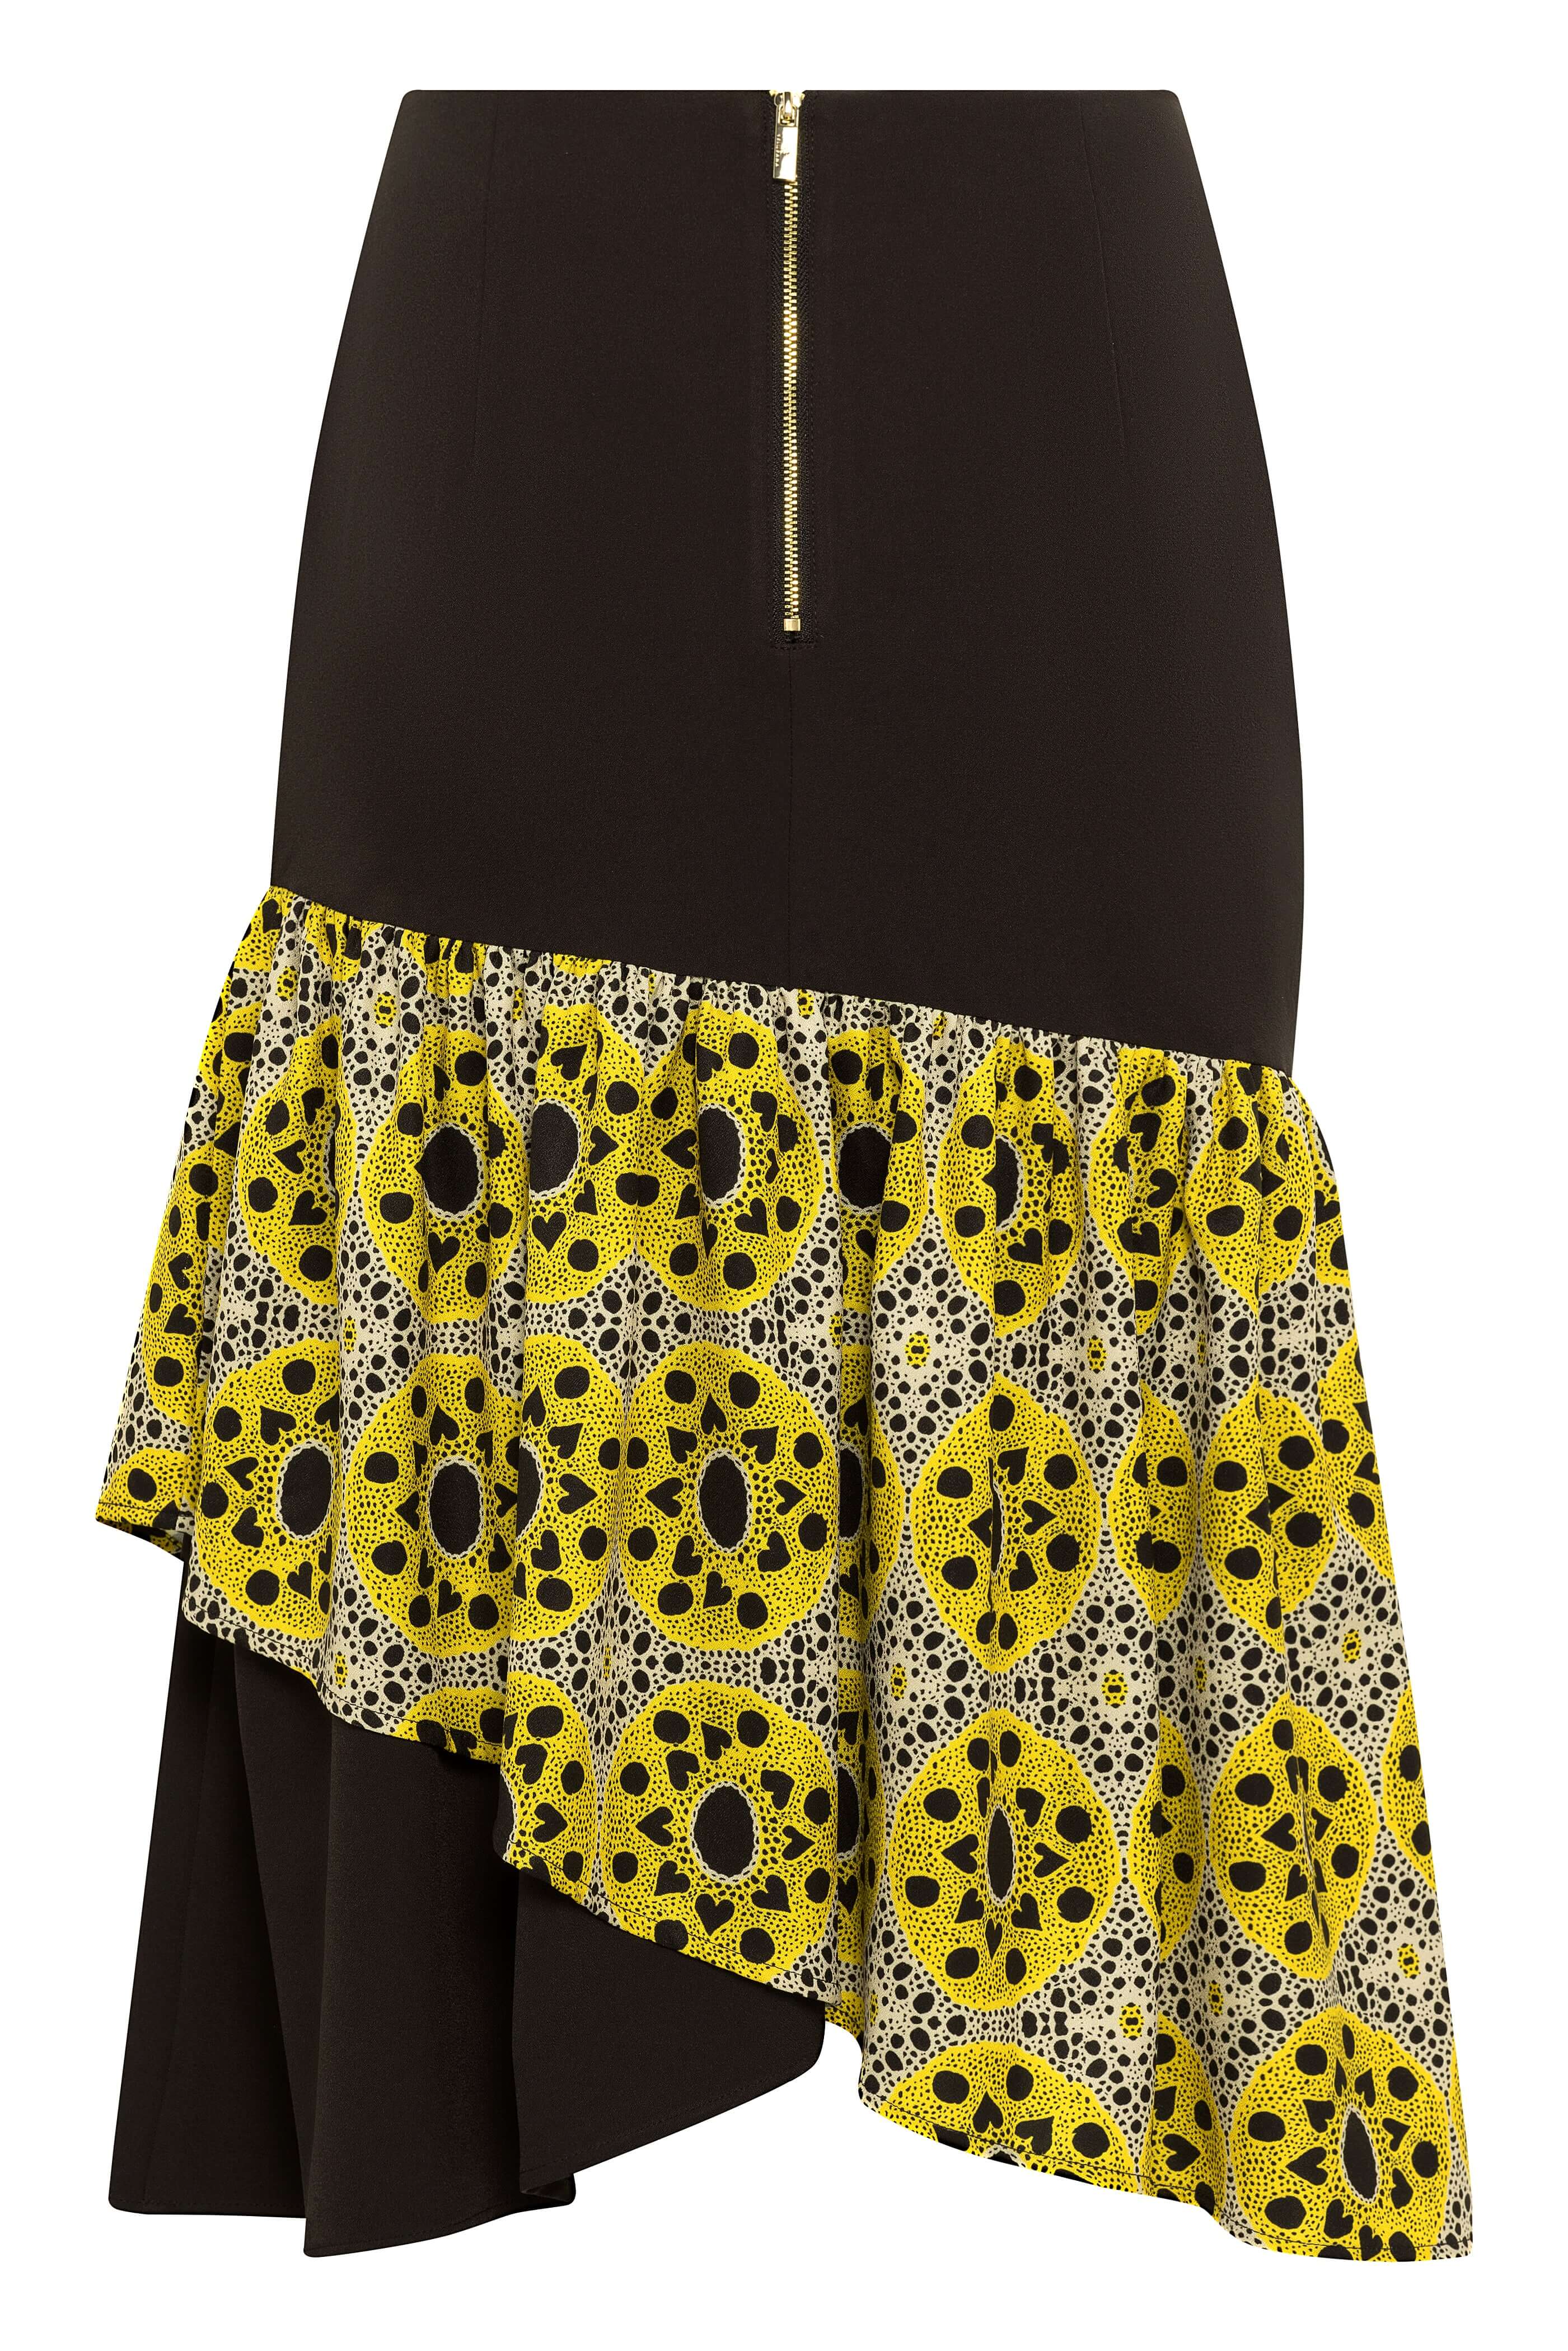 Sigi Fitted Midi Skirt Back View (Black & Yellow)